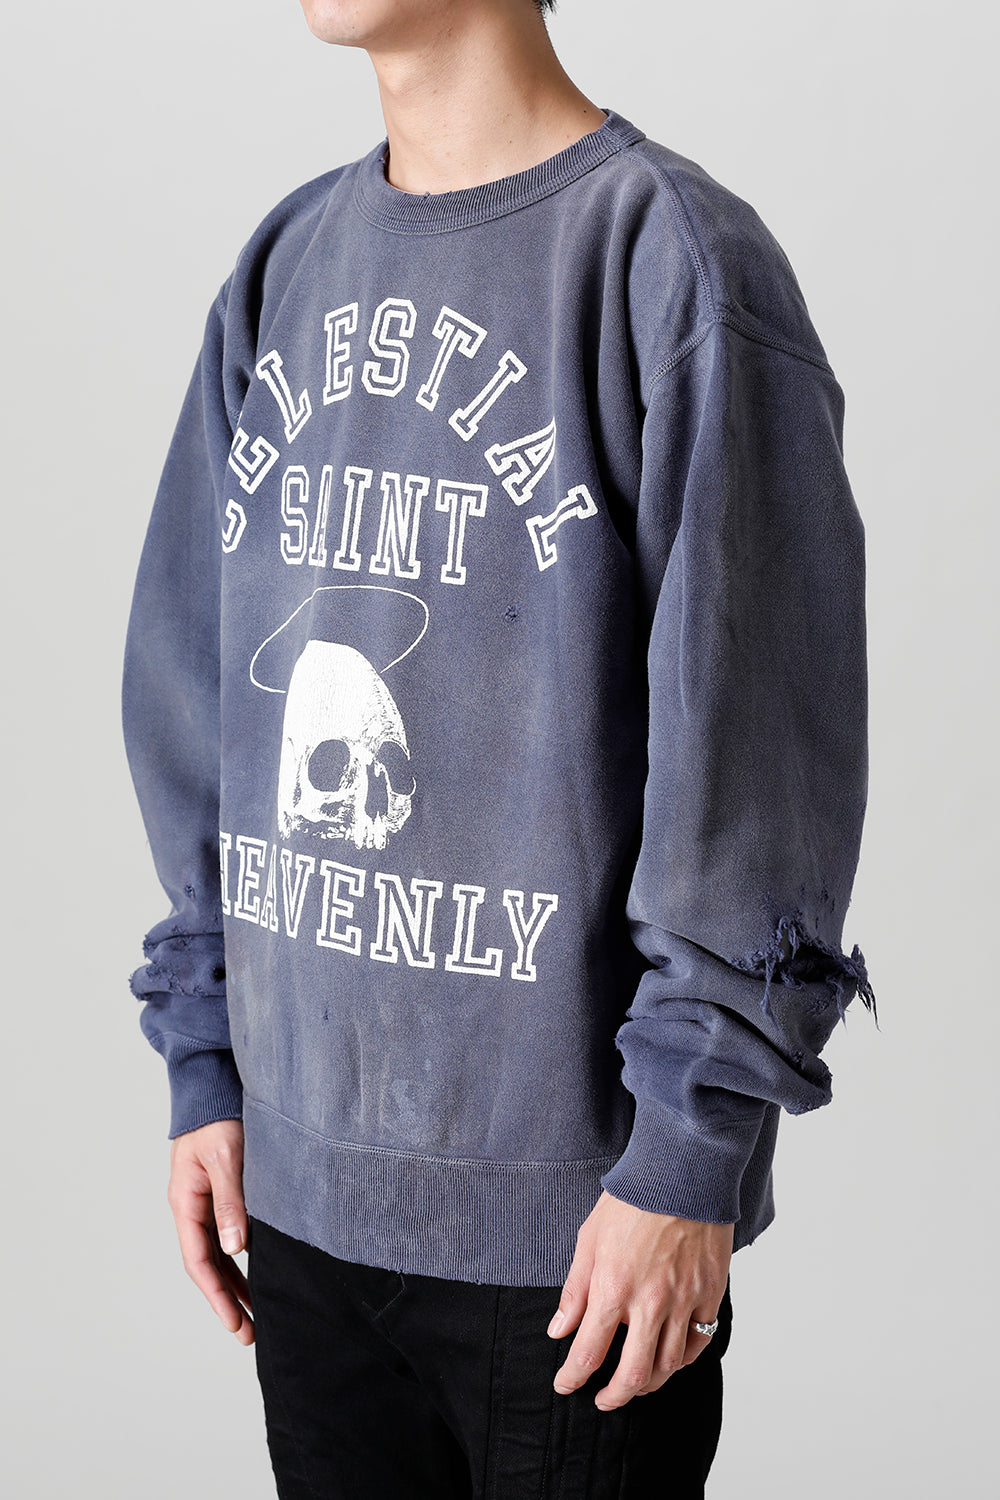 SM-A21-0000-027 | Skull Sweat shirt Navy | SAINT Mxxxxxx | Online